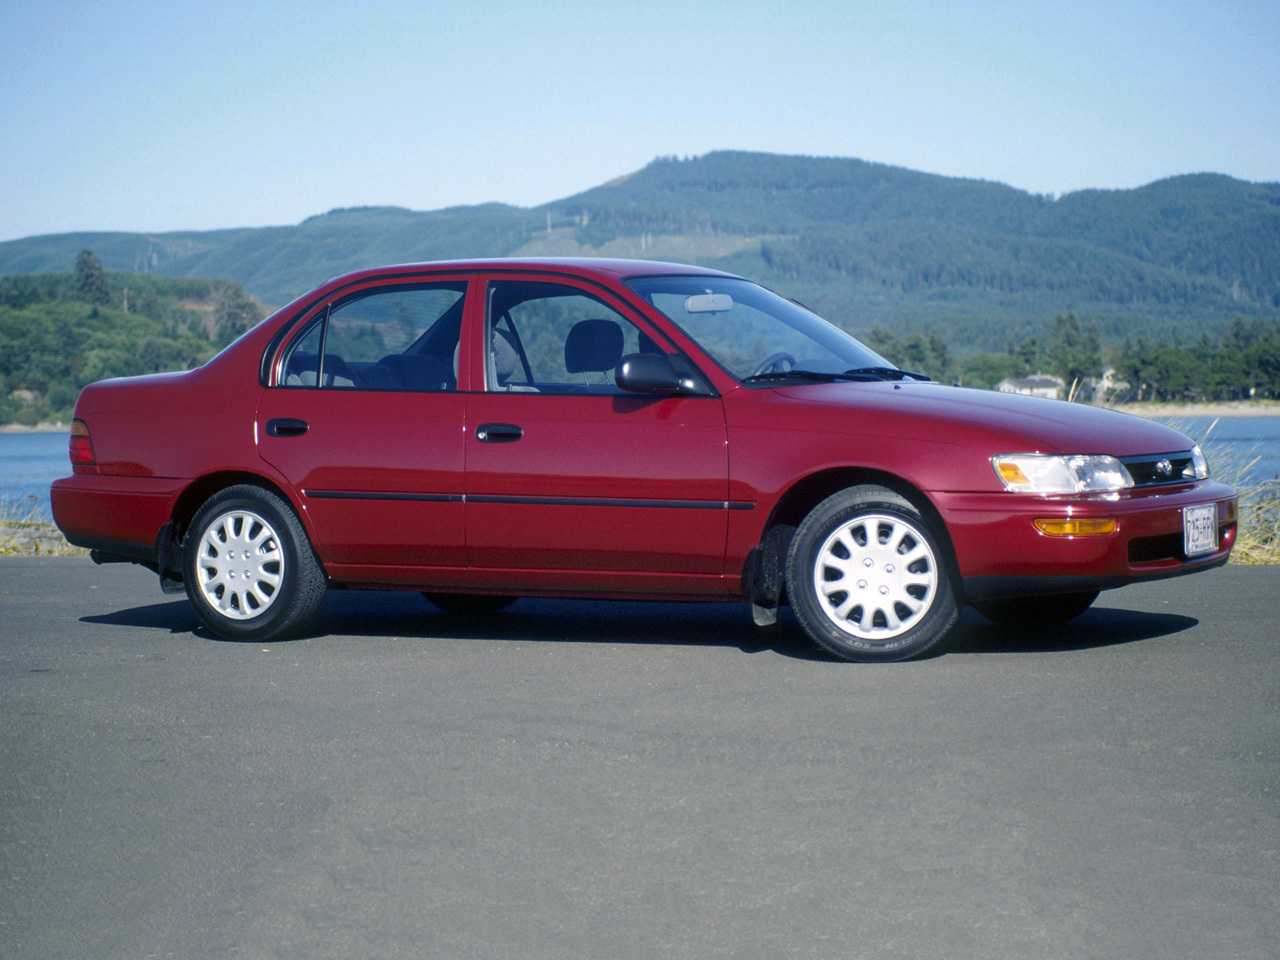 Toyota corolla e11 (1997-2001) - проблемы и неисправности